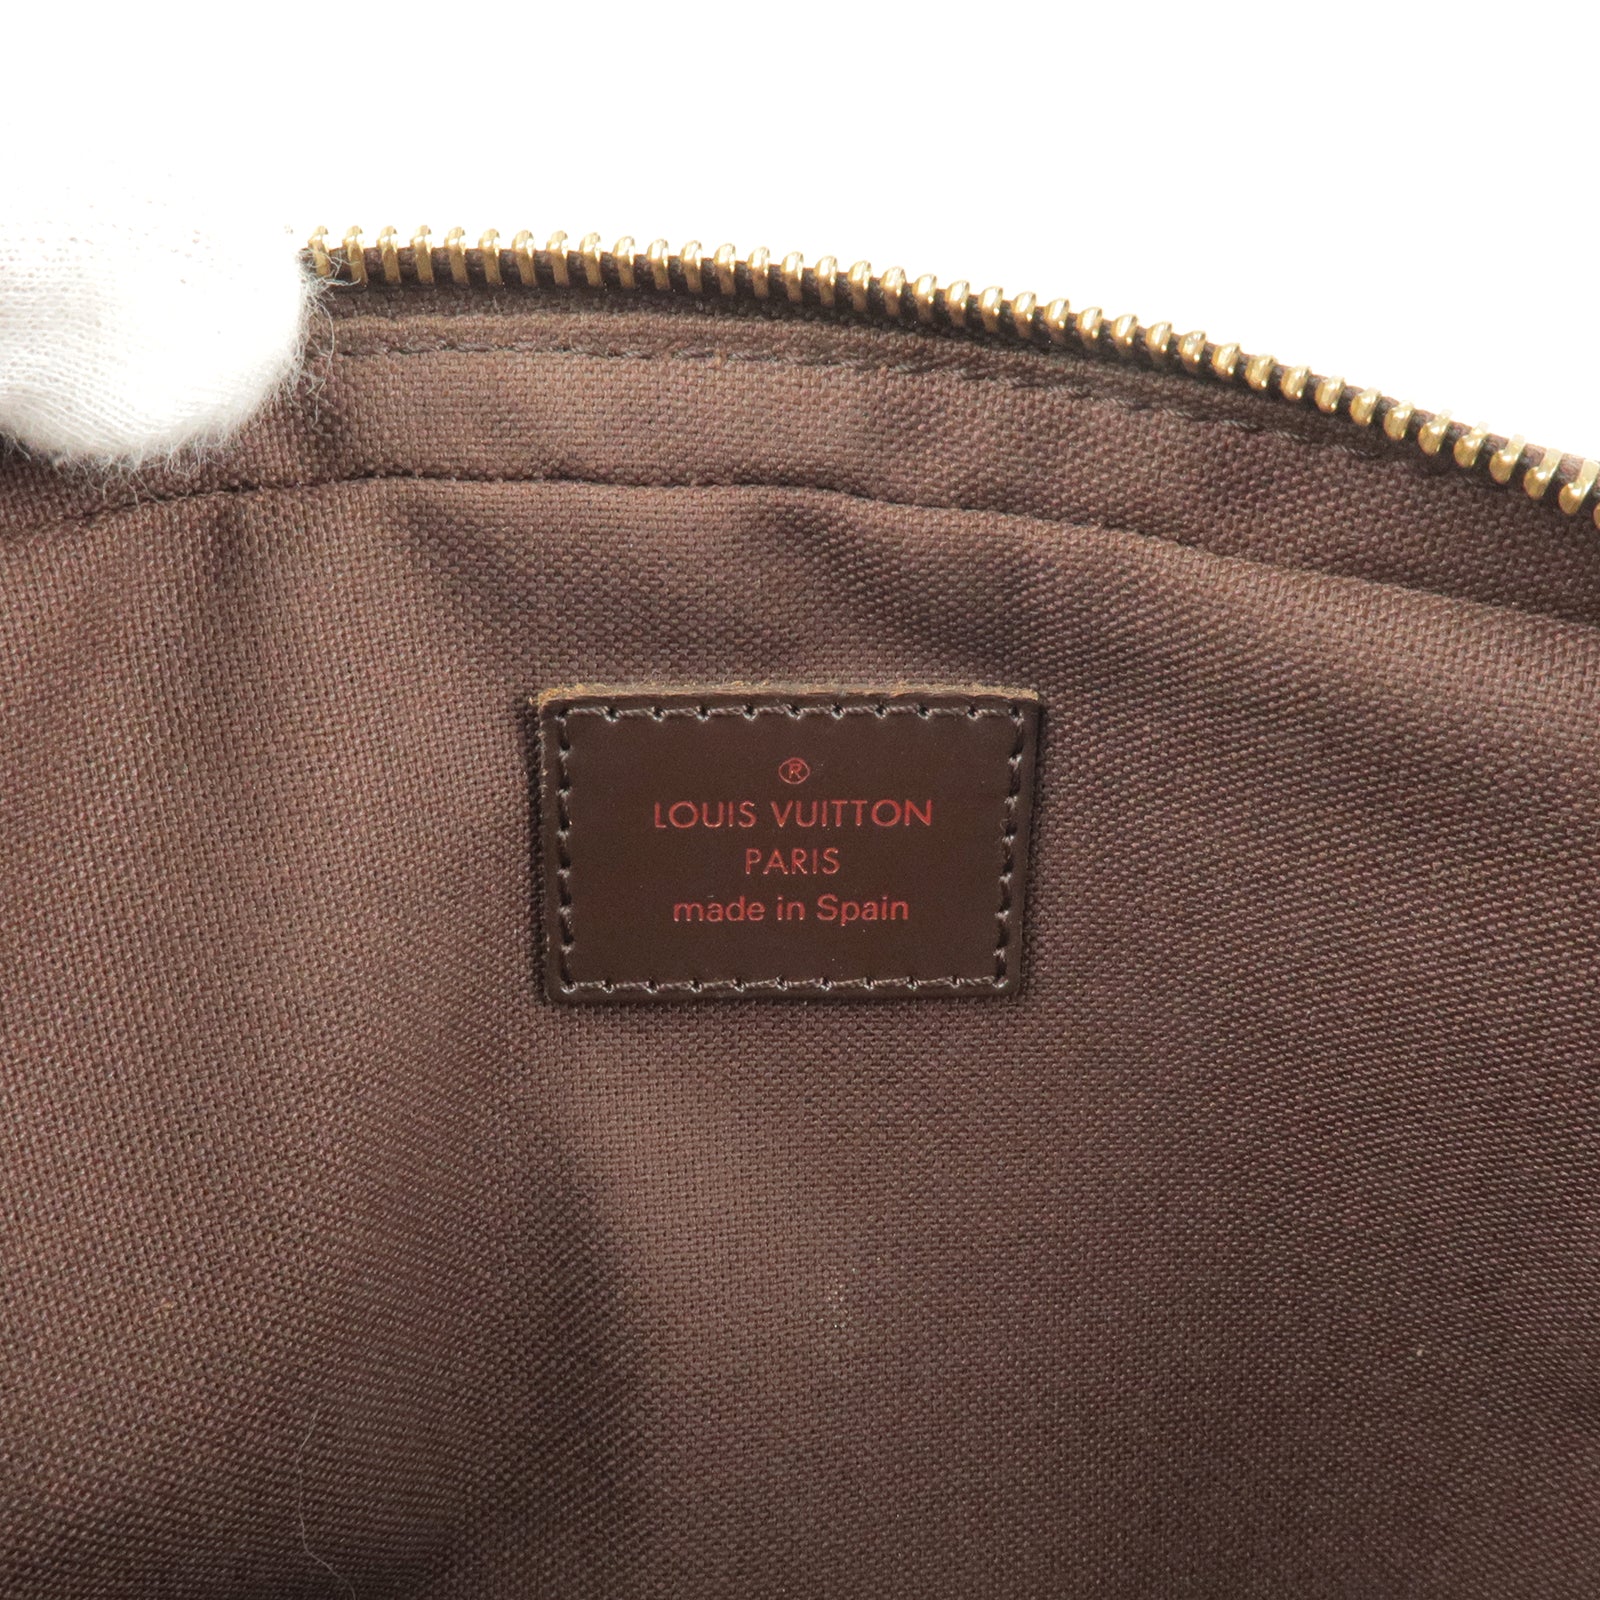 Damier - Bum - Sac de voyage Louis Vuitton Keepall 50 cm en cuir